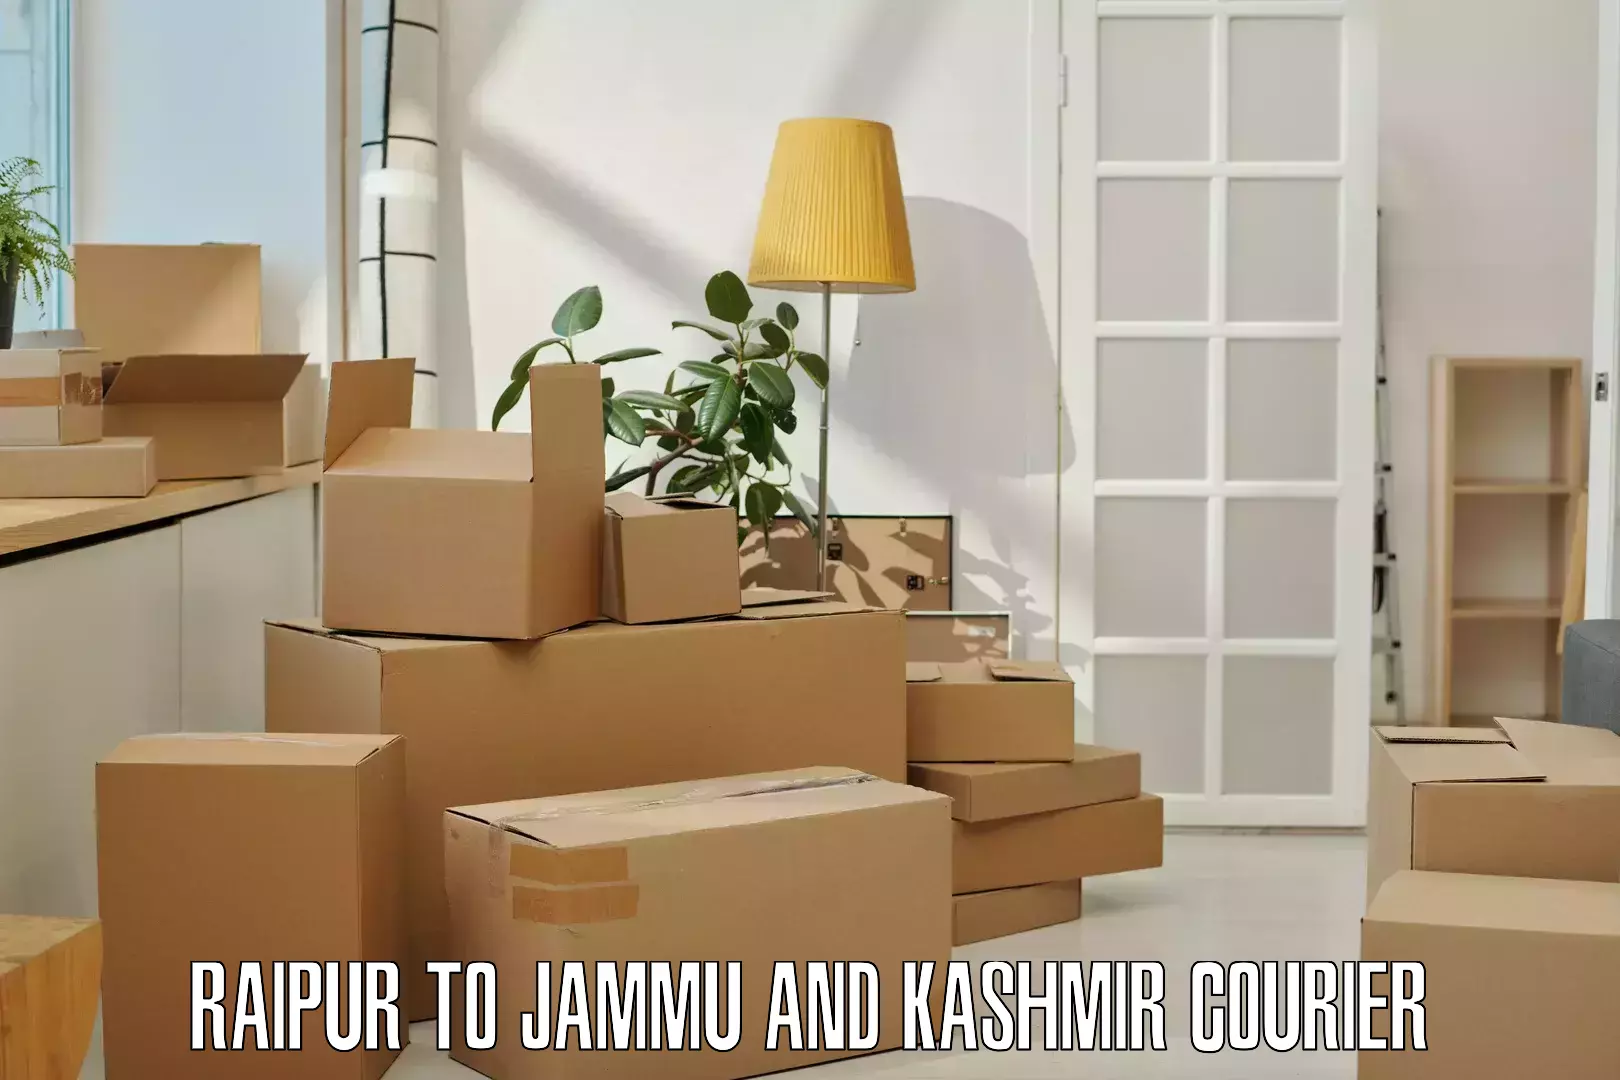 Package delivery network Raipur to Srinagar Kashmir